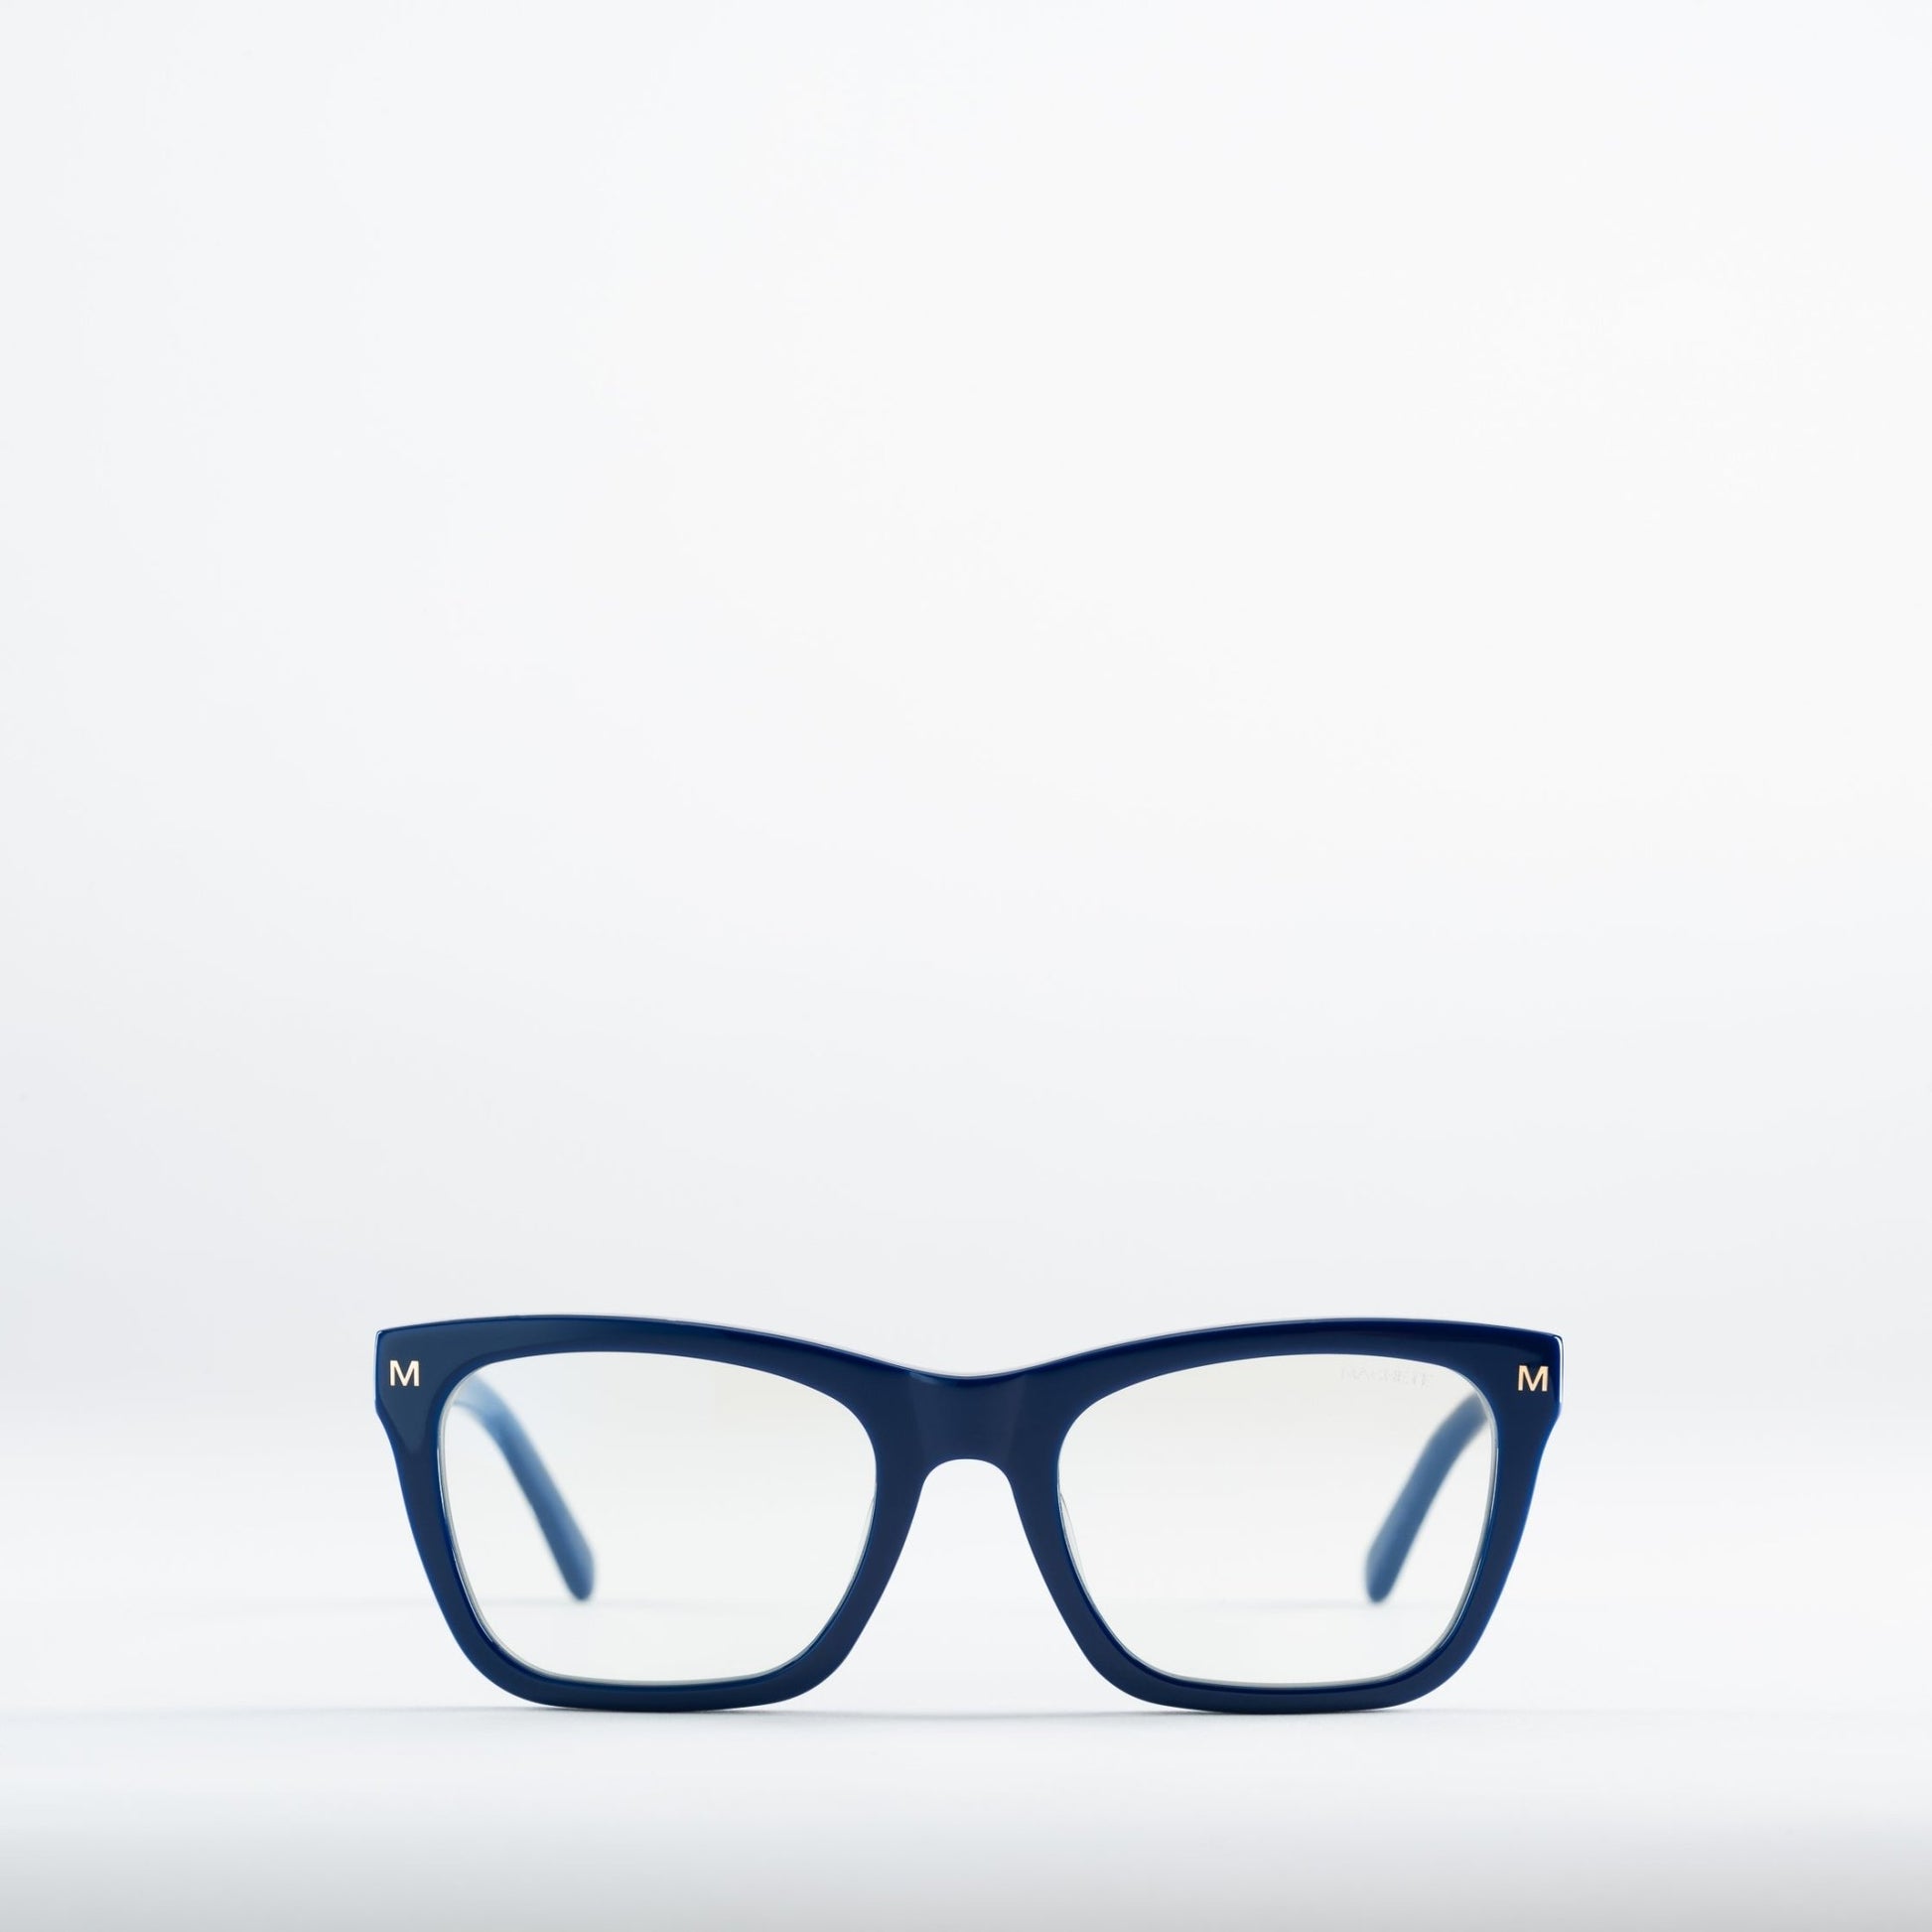 MACHETE Glasses in Parisian Blue